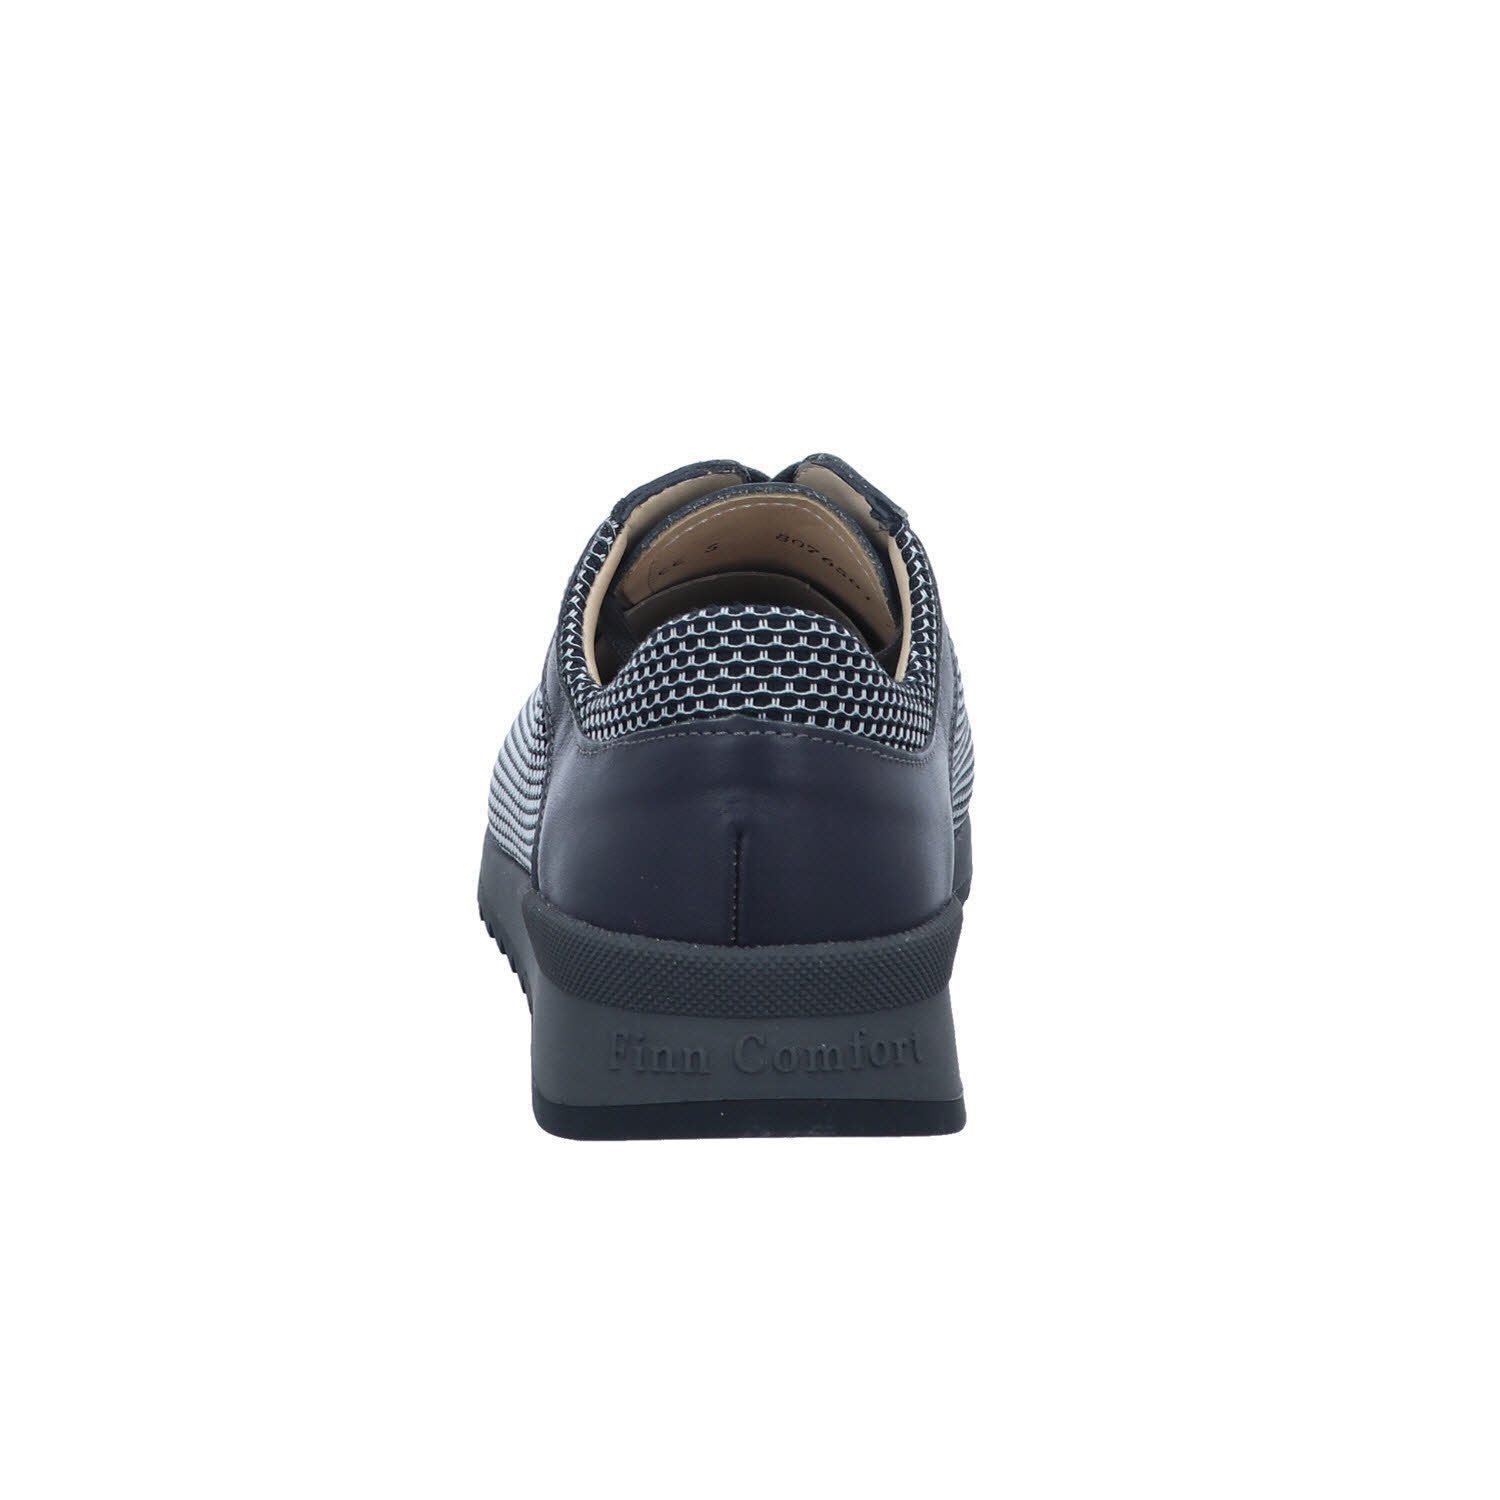 Finn silver/anthracite Sneaker Comfort